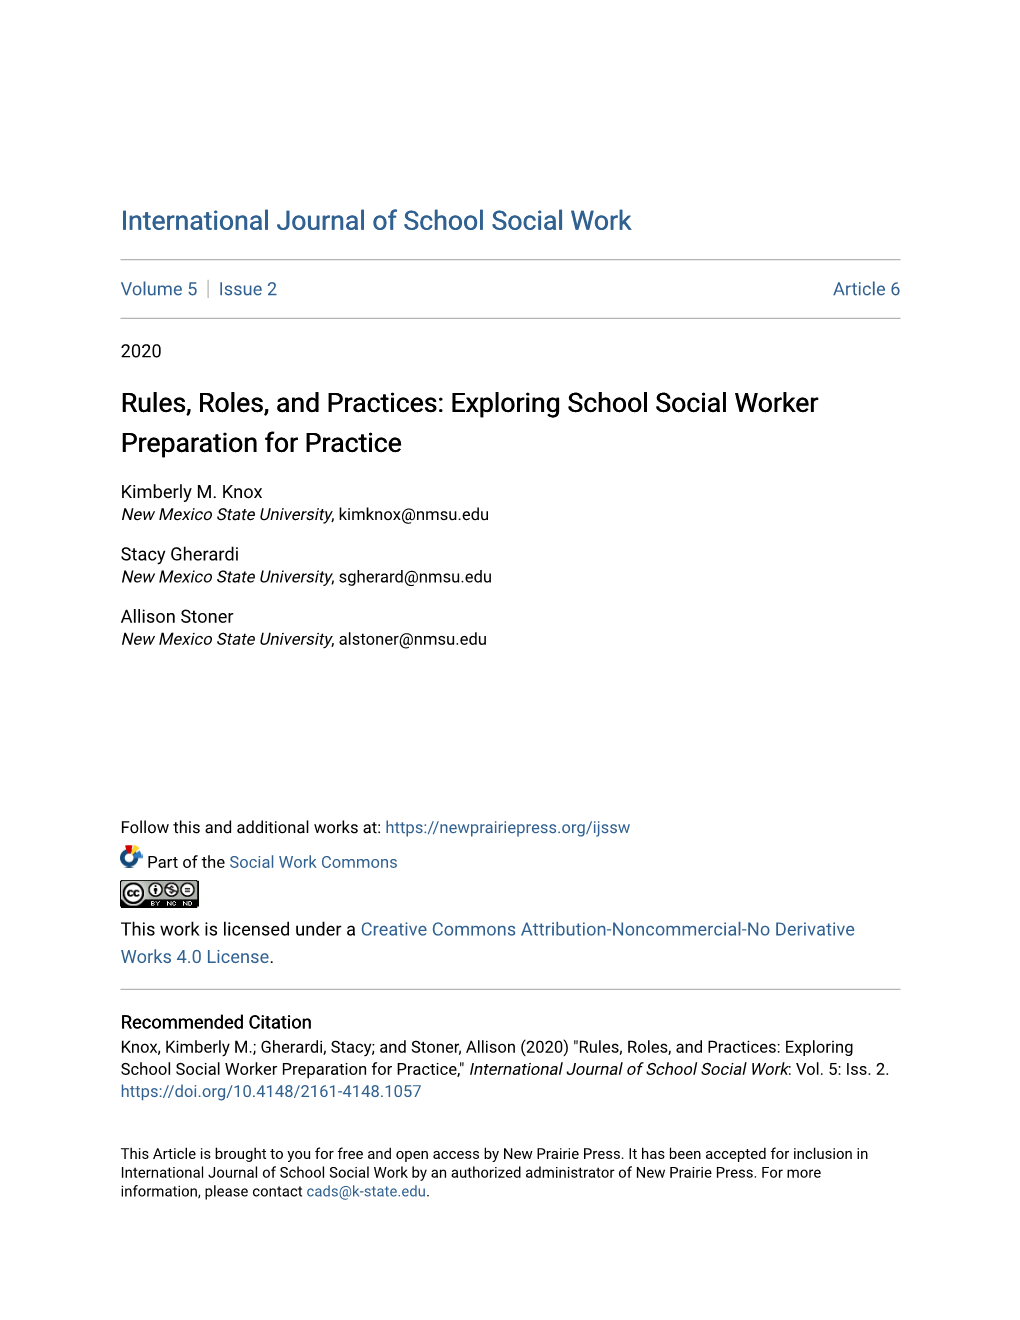 Exploring School Social Worker Preparation for Practice